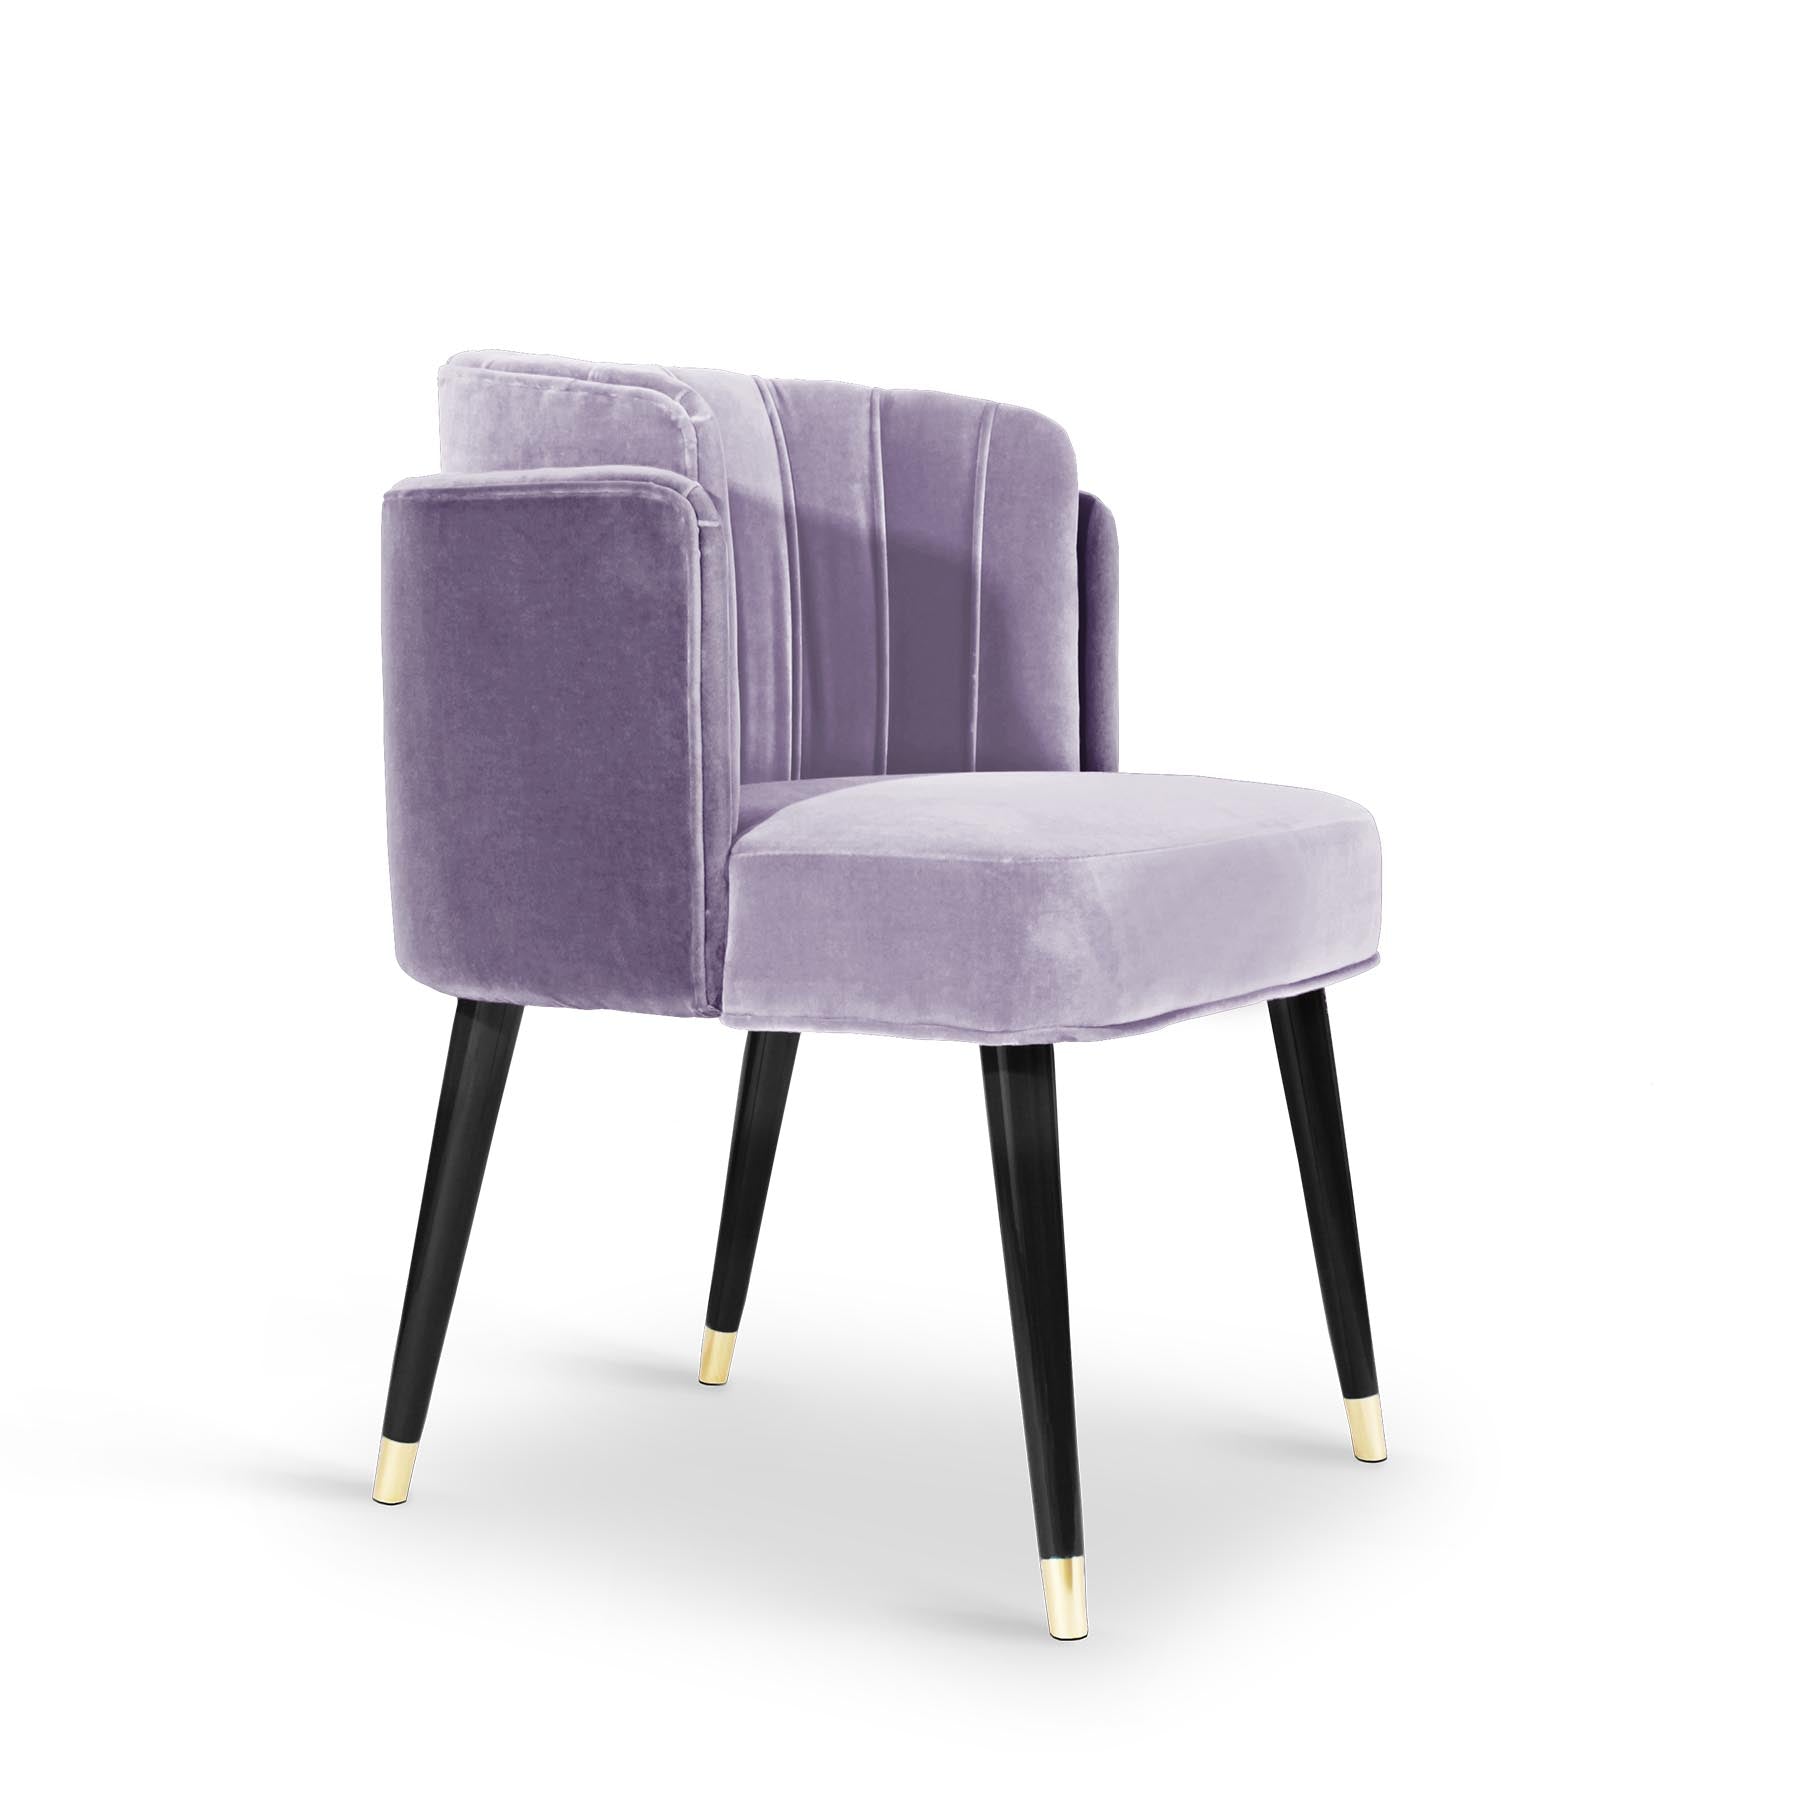 ANITA - CHAIR | Modern Furniture + Decor